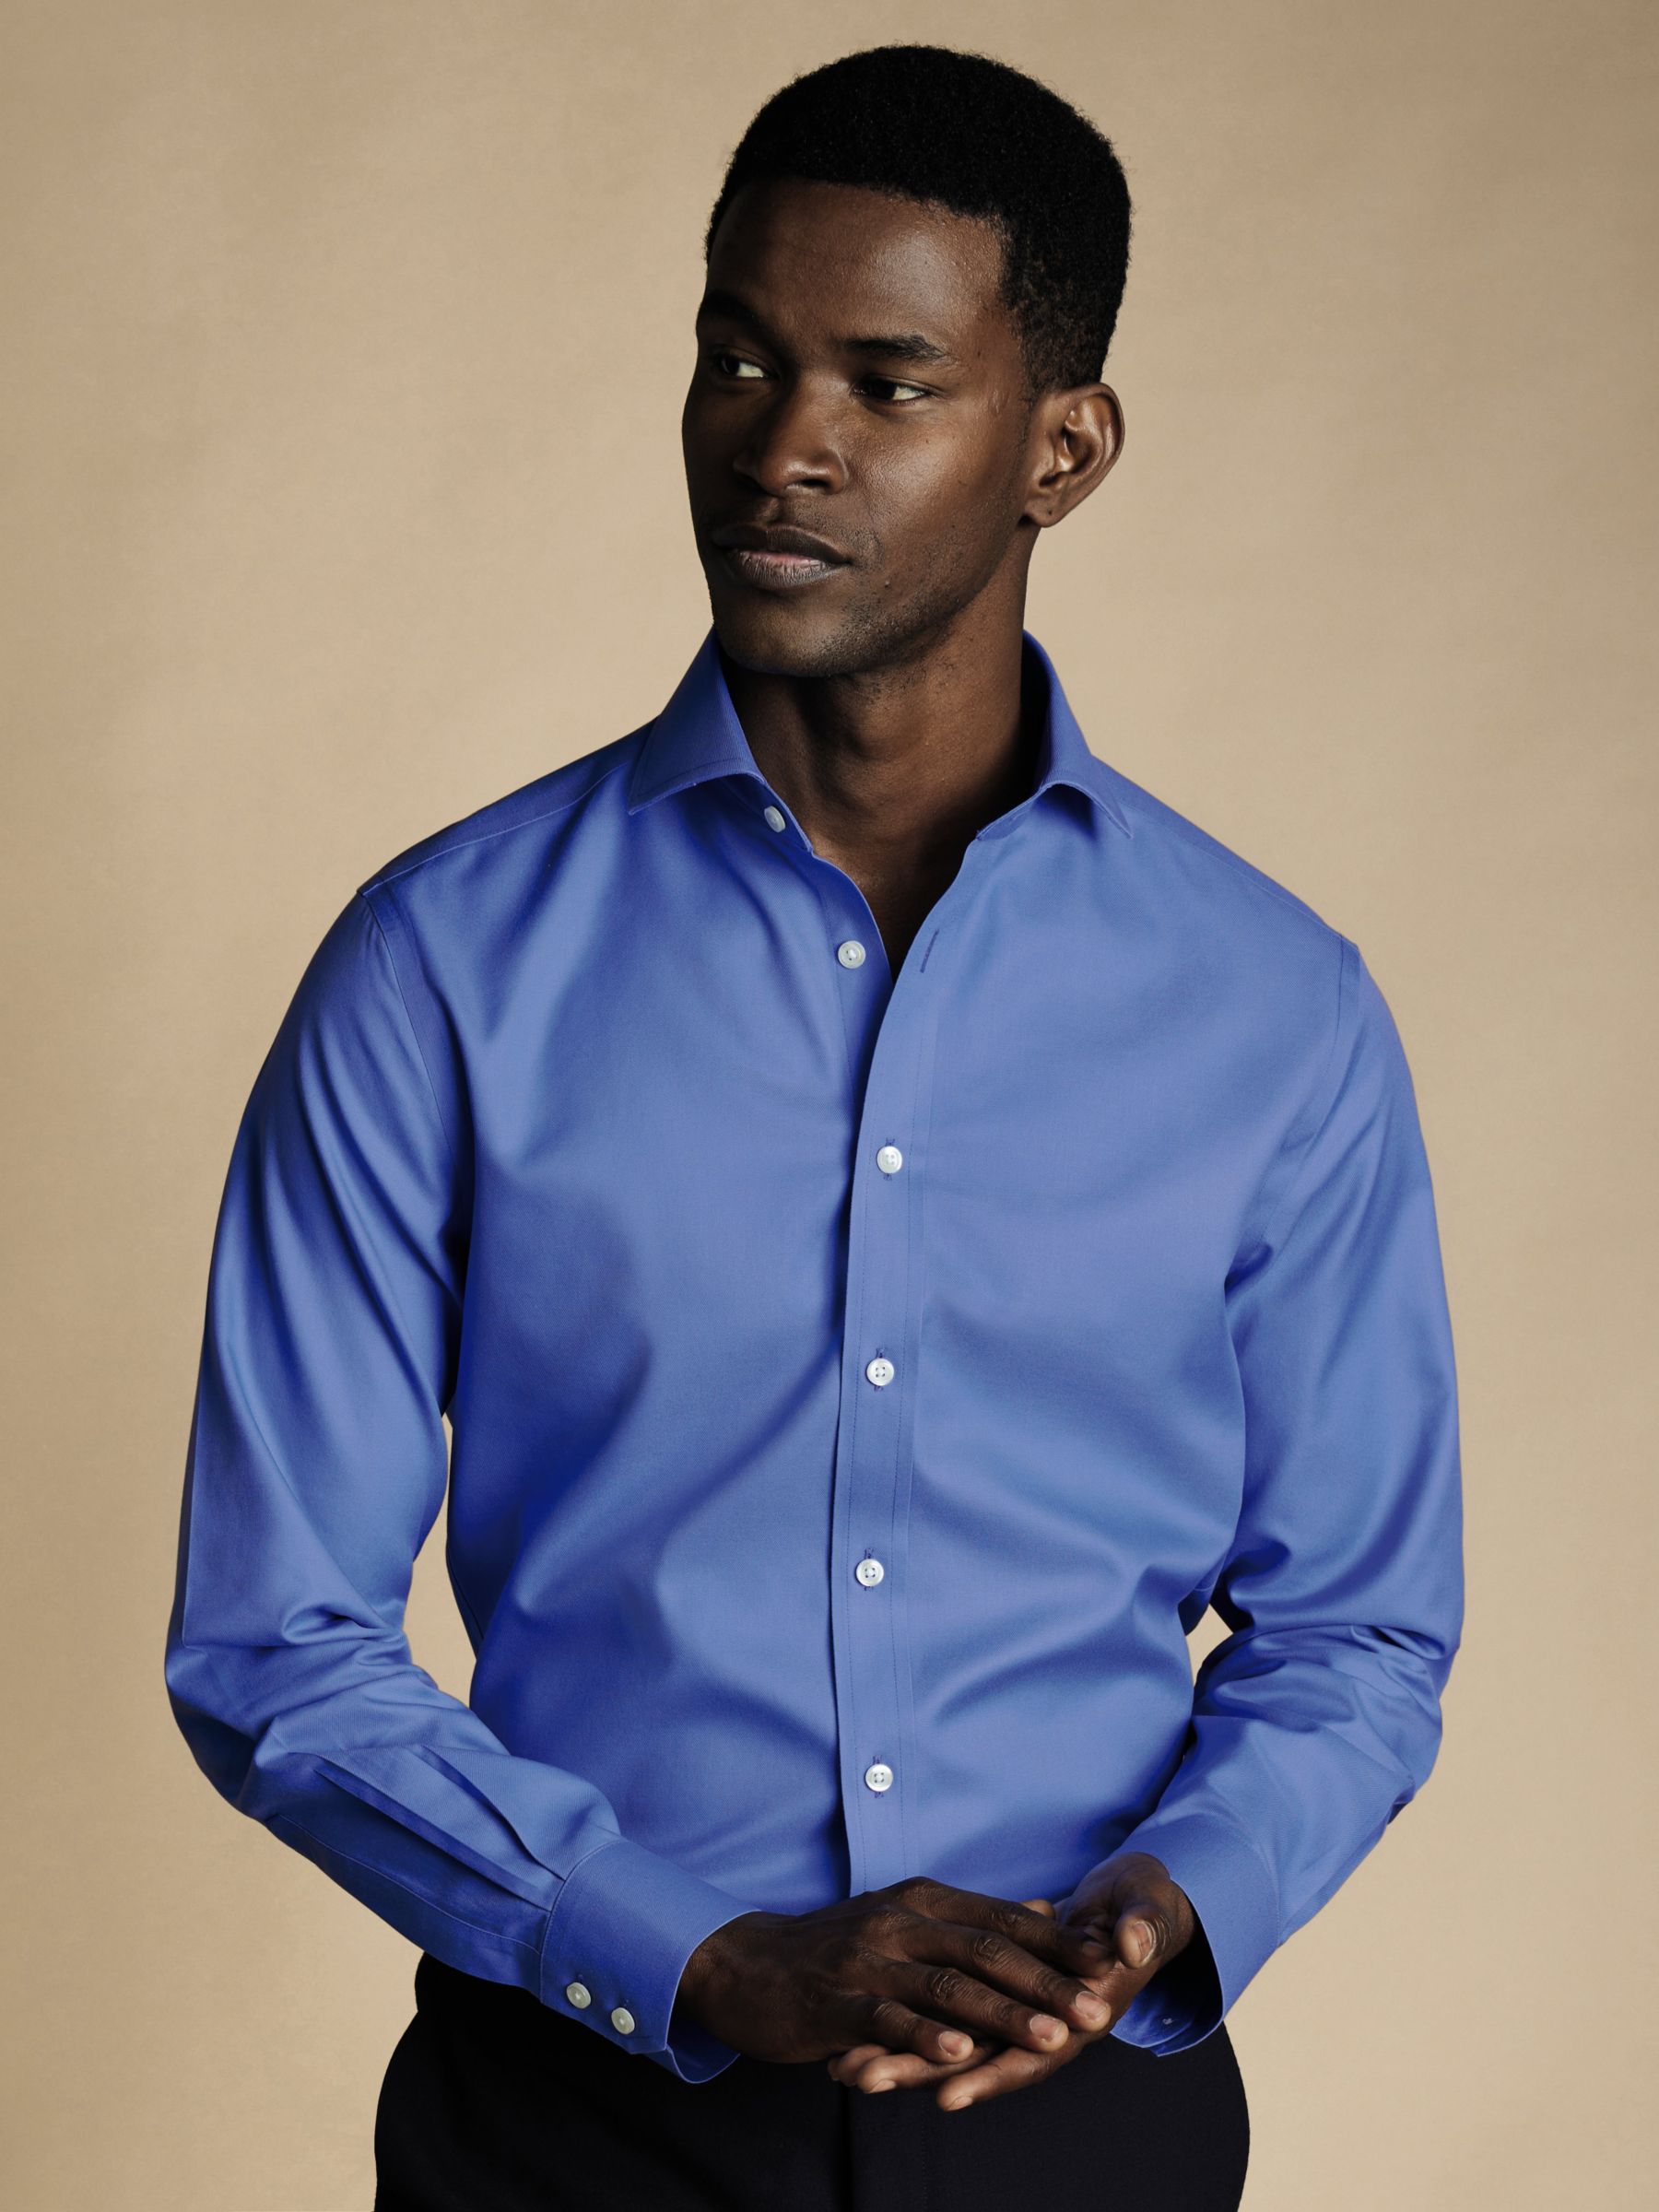 Charles Tyrwhitt Non-Iron Twill Shirt, Ocean Blue, 17